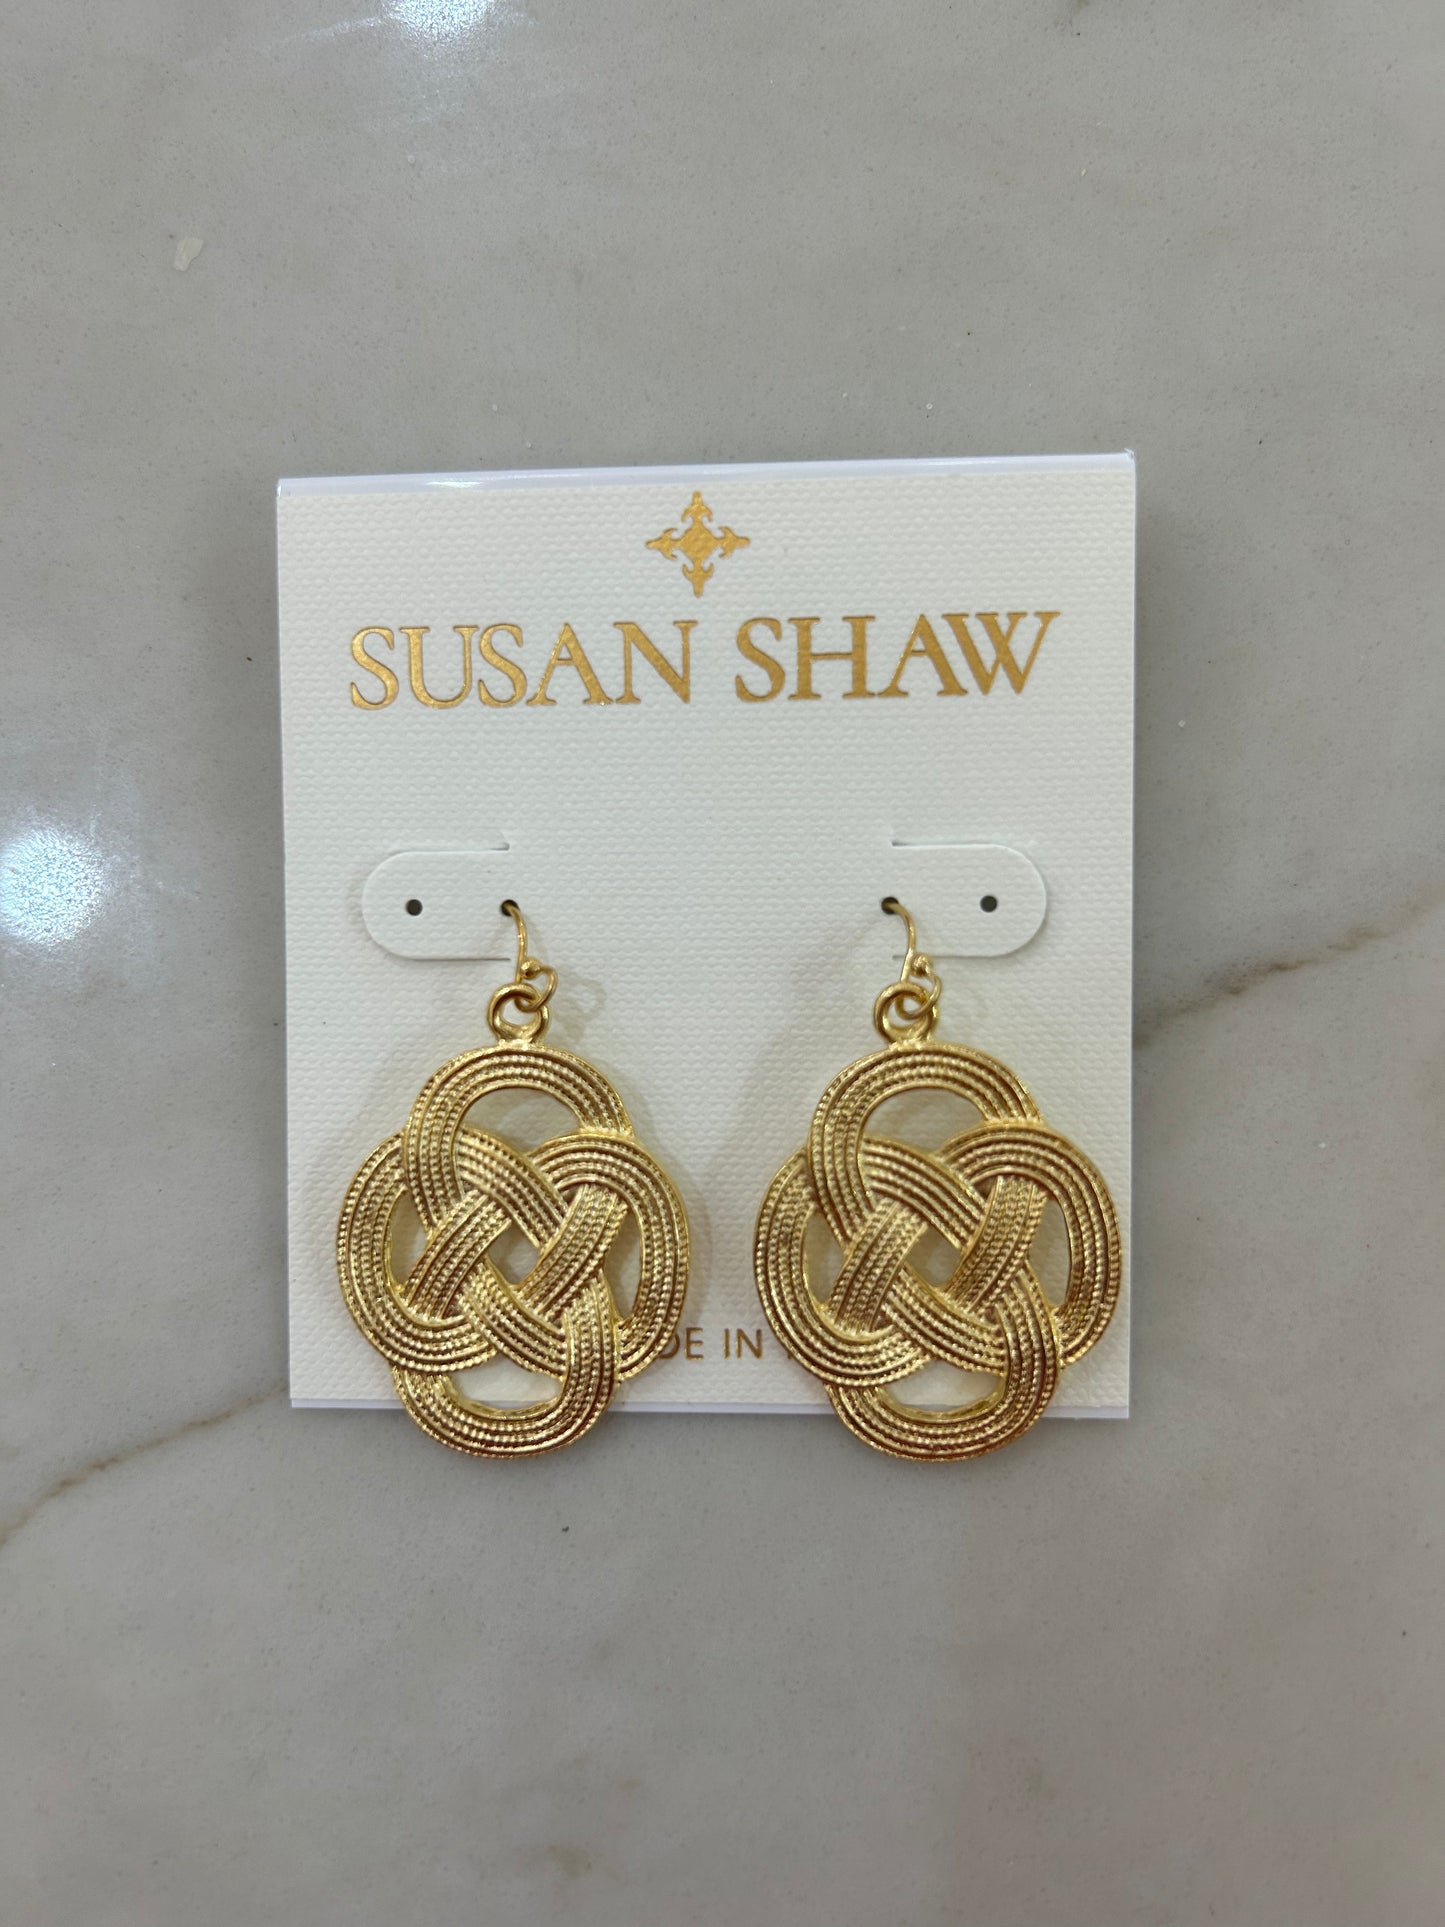 Susan Shaw Gold Filigree Earrings